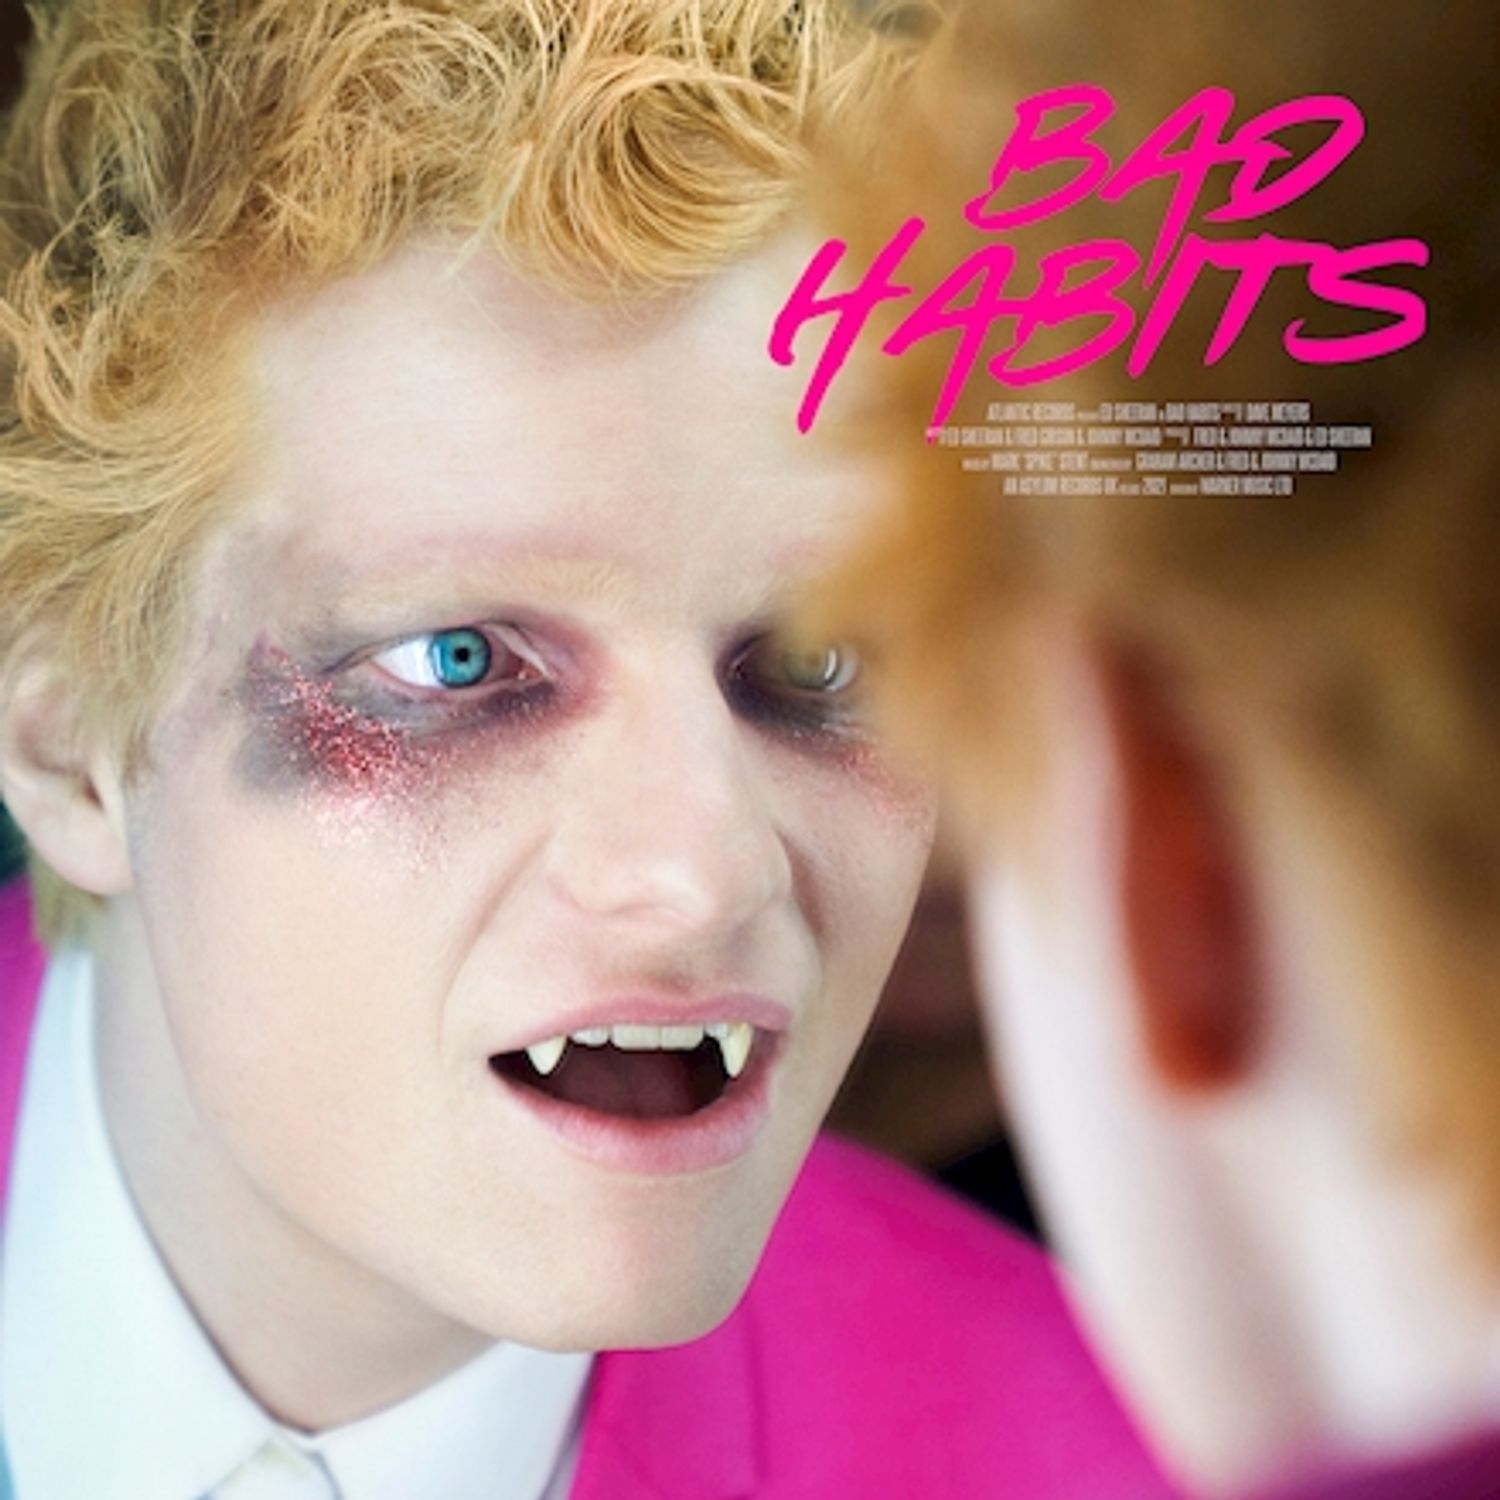 Ed Sheeran annonce "Bad Habits" le 25 juin !